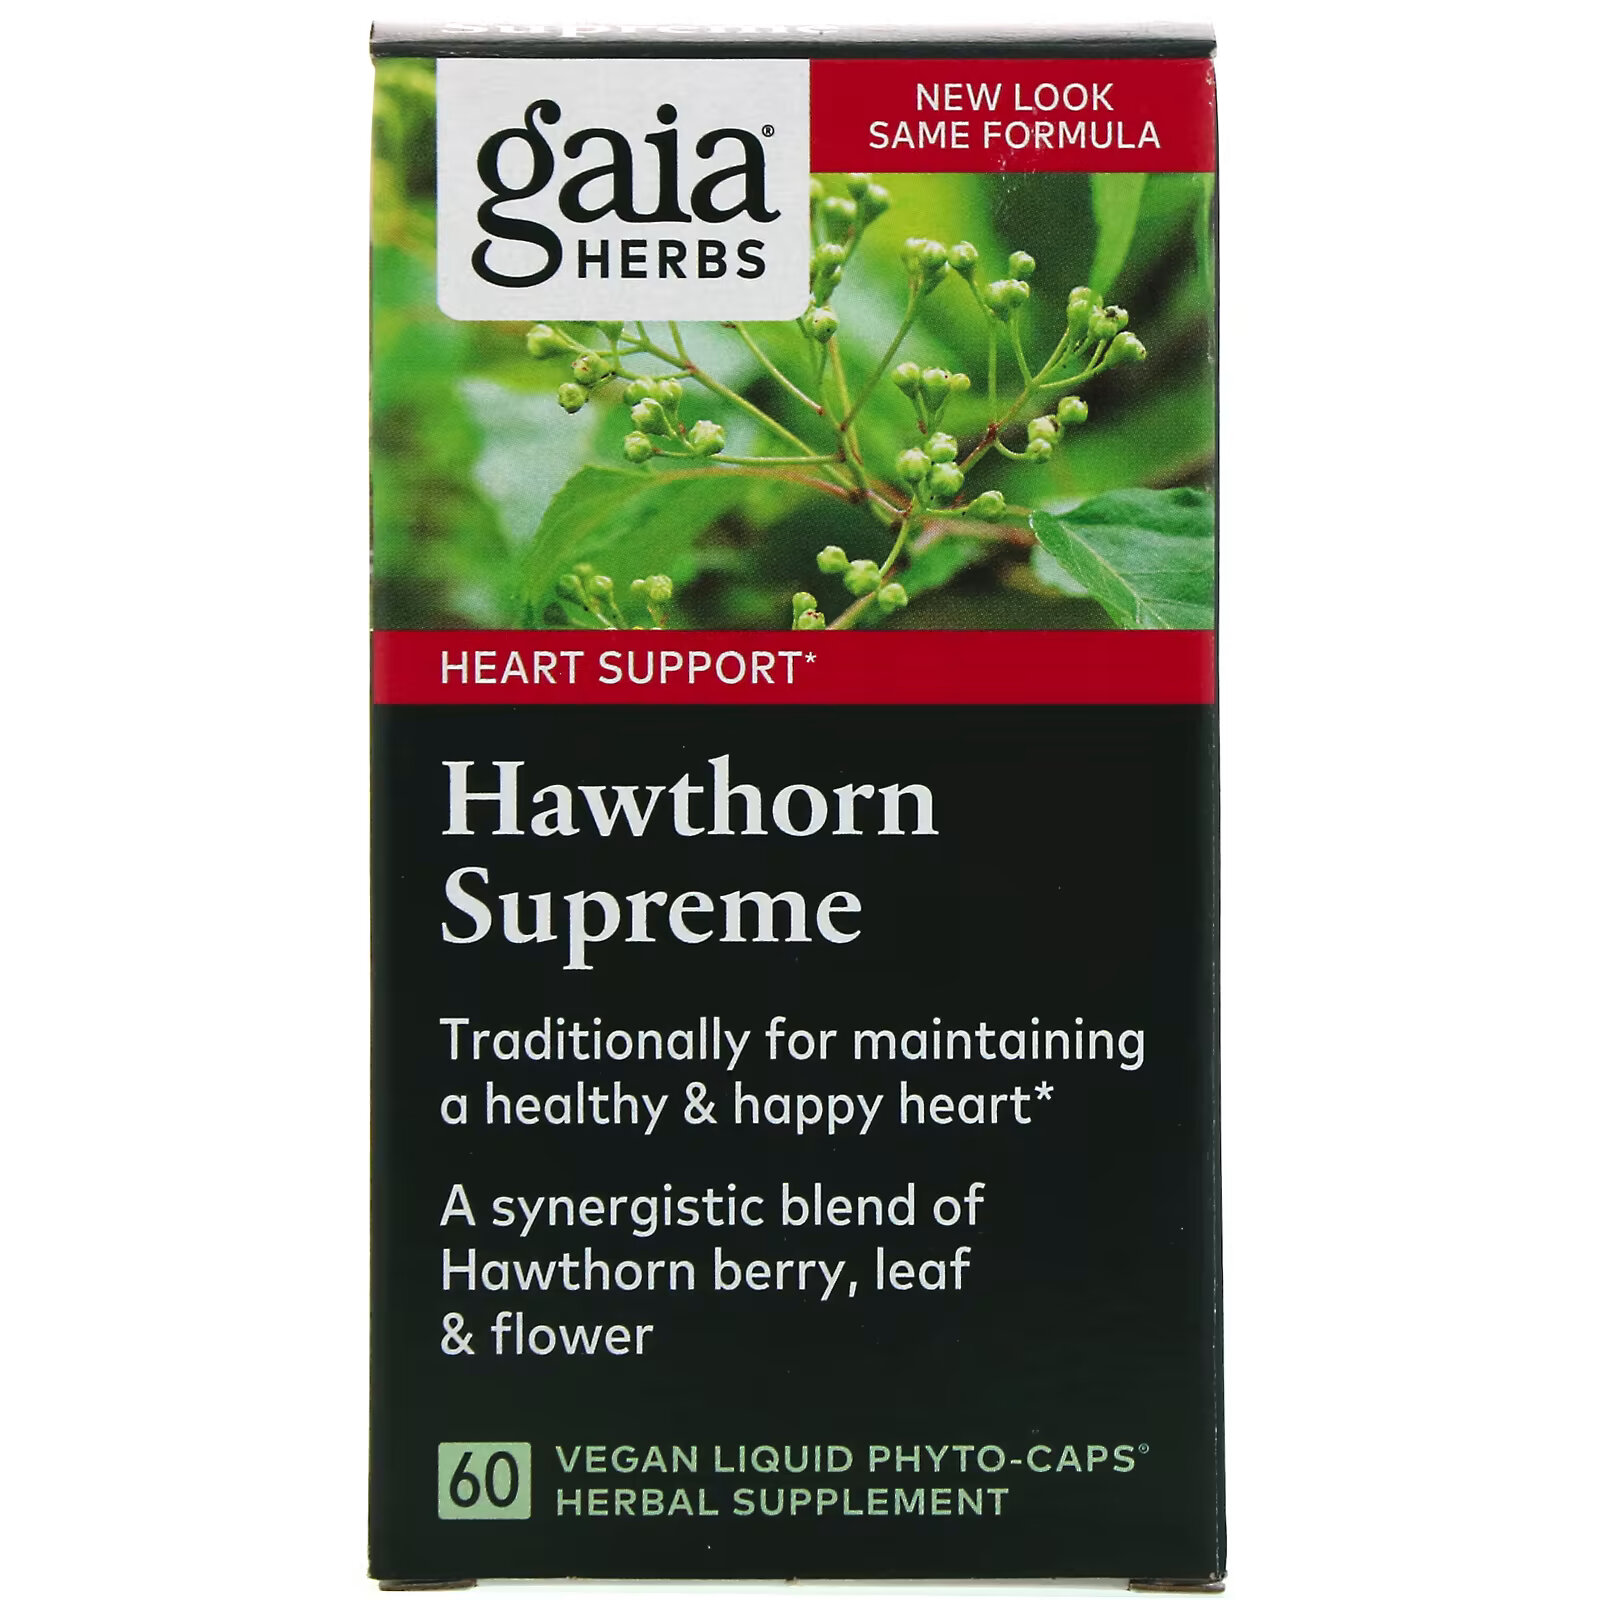 Gaia Herbs, Hawthorn Supreme, 60 растительных капсул с жидкостью gaia herbs sleepthru 60 растительных фито капсул с жидкостью